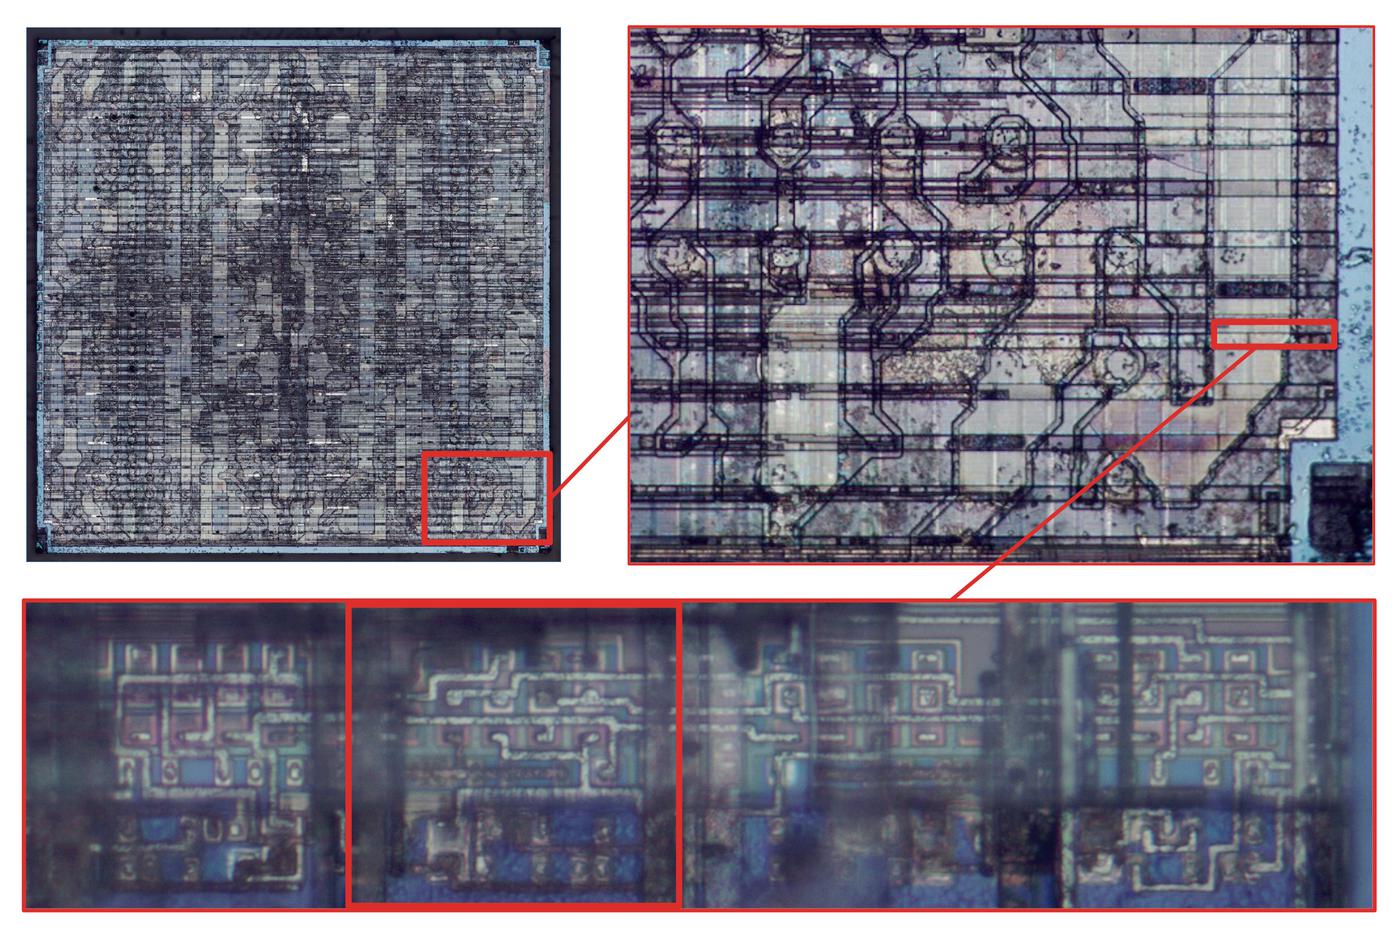 Teardown of a logic chip from a vintage IBM ES/9000 mainframe